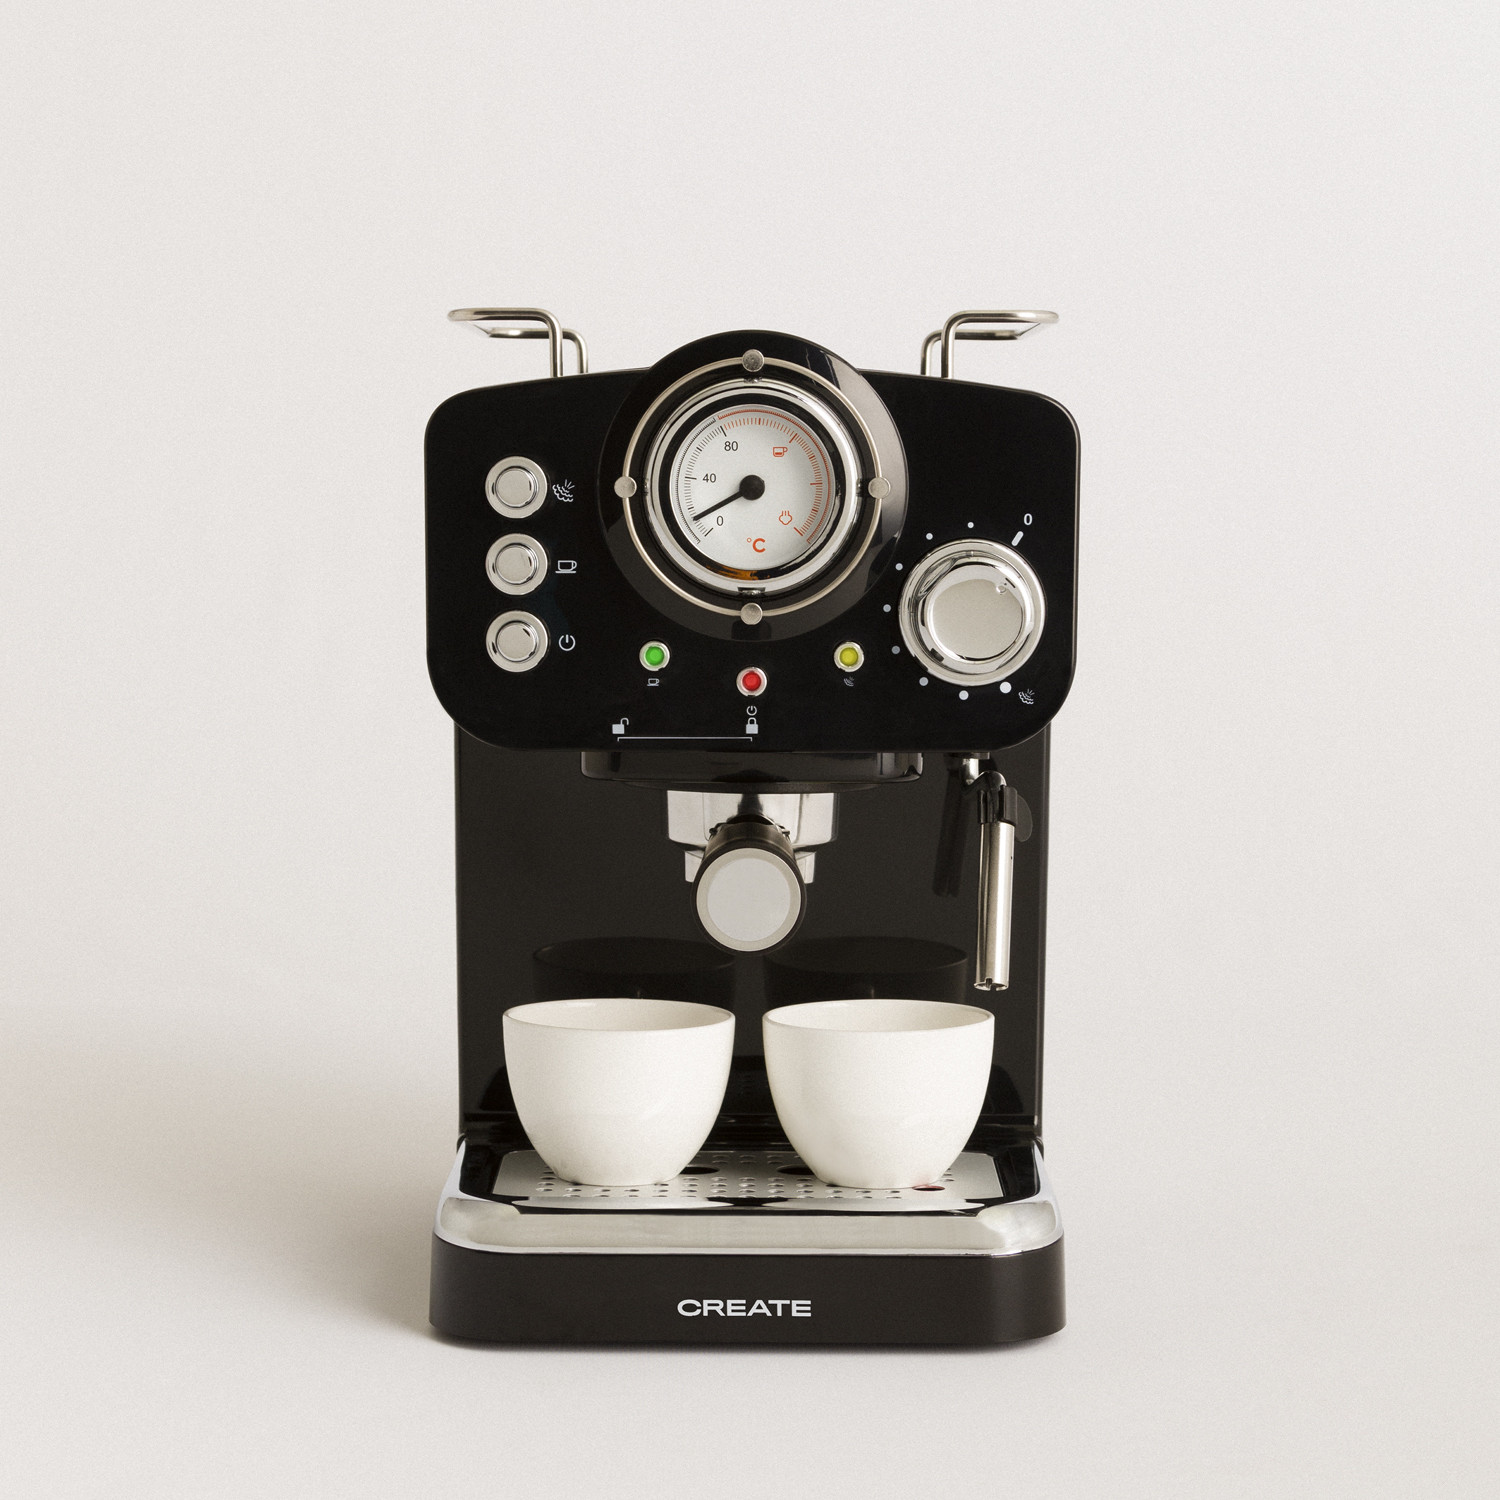 THERA RETRO Express-koffiezetapparaat - Create